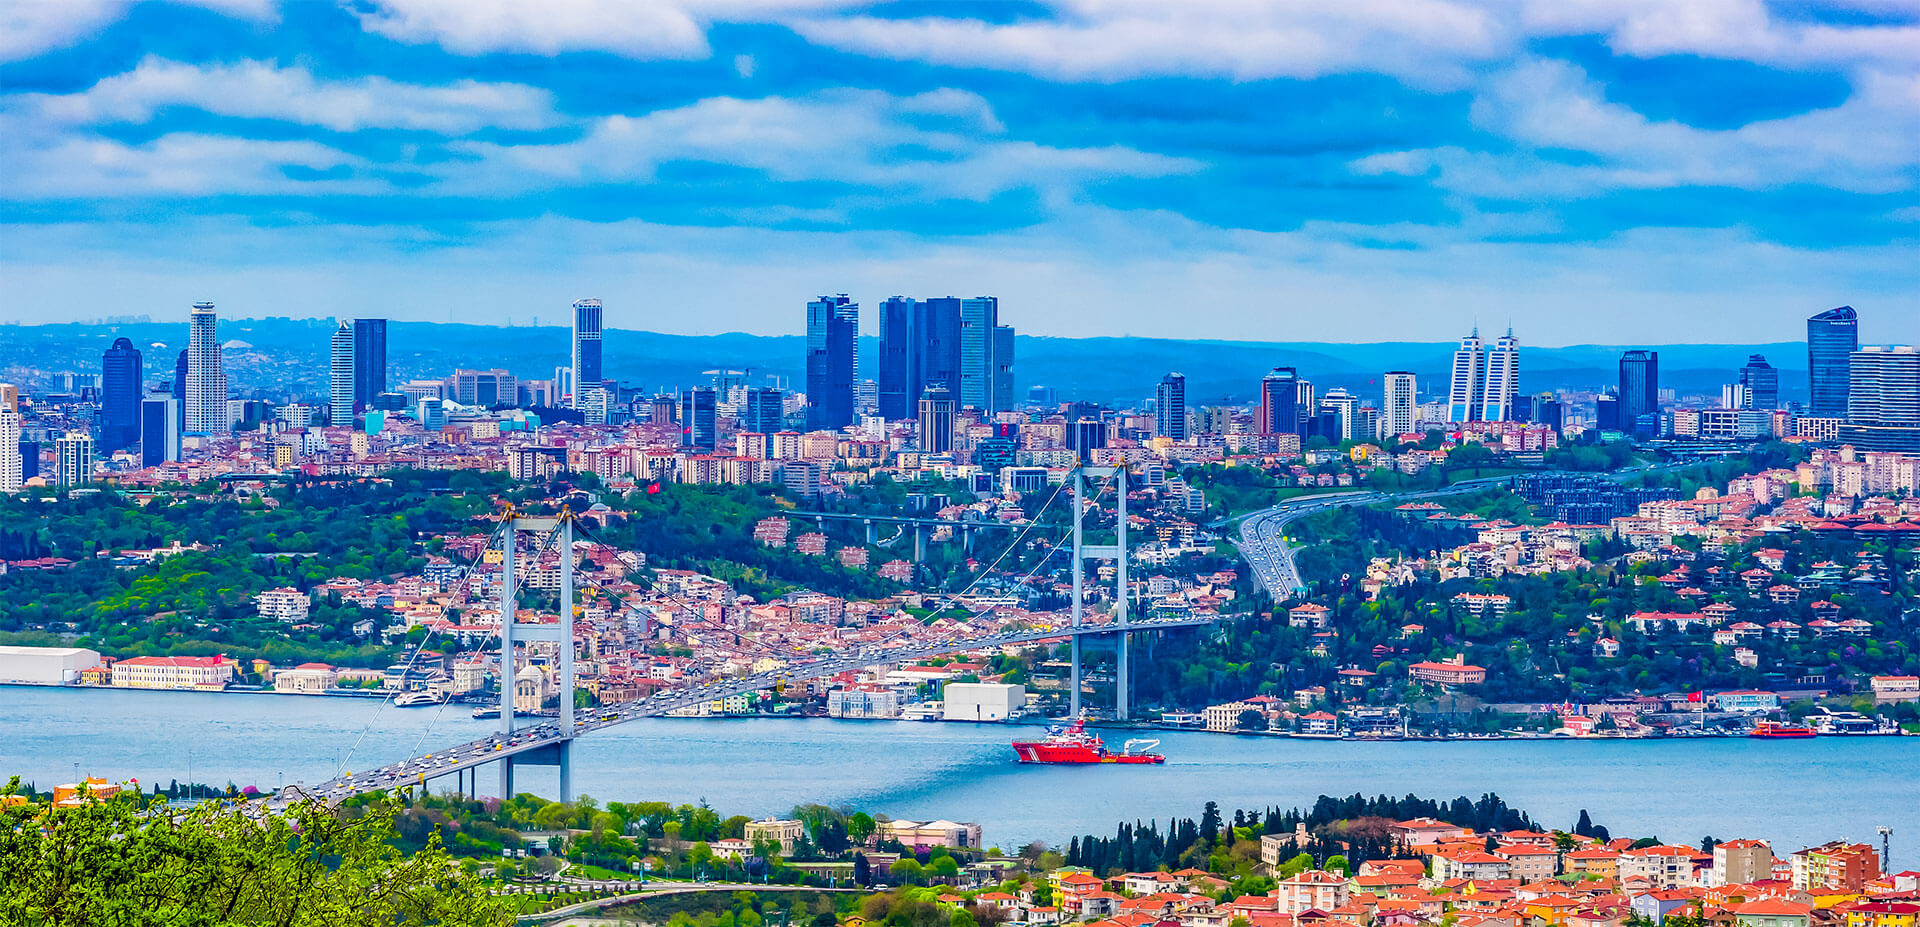 view-istanbul-with-bosphorus-bridge-asia-europe